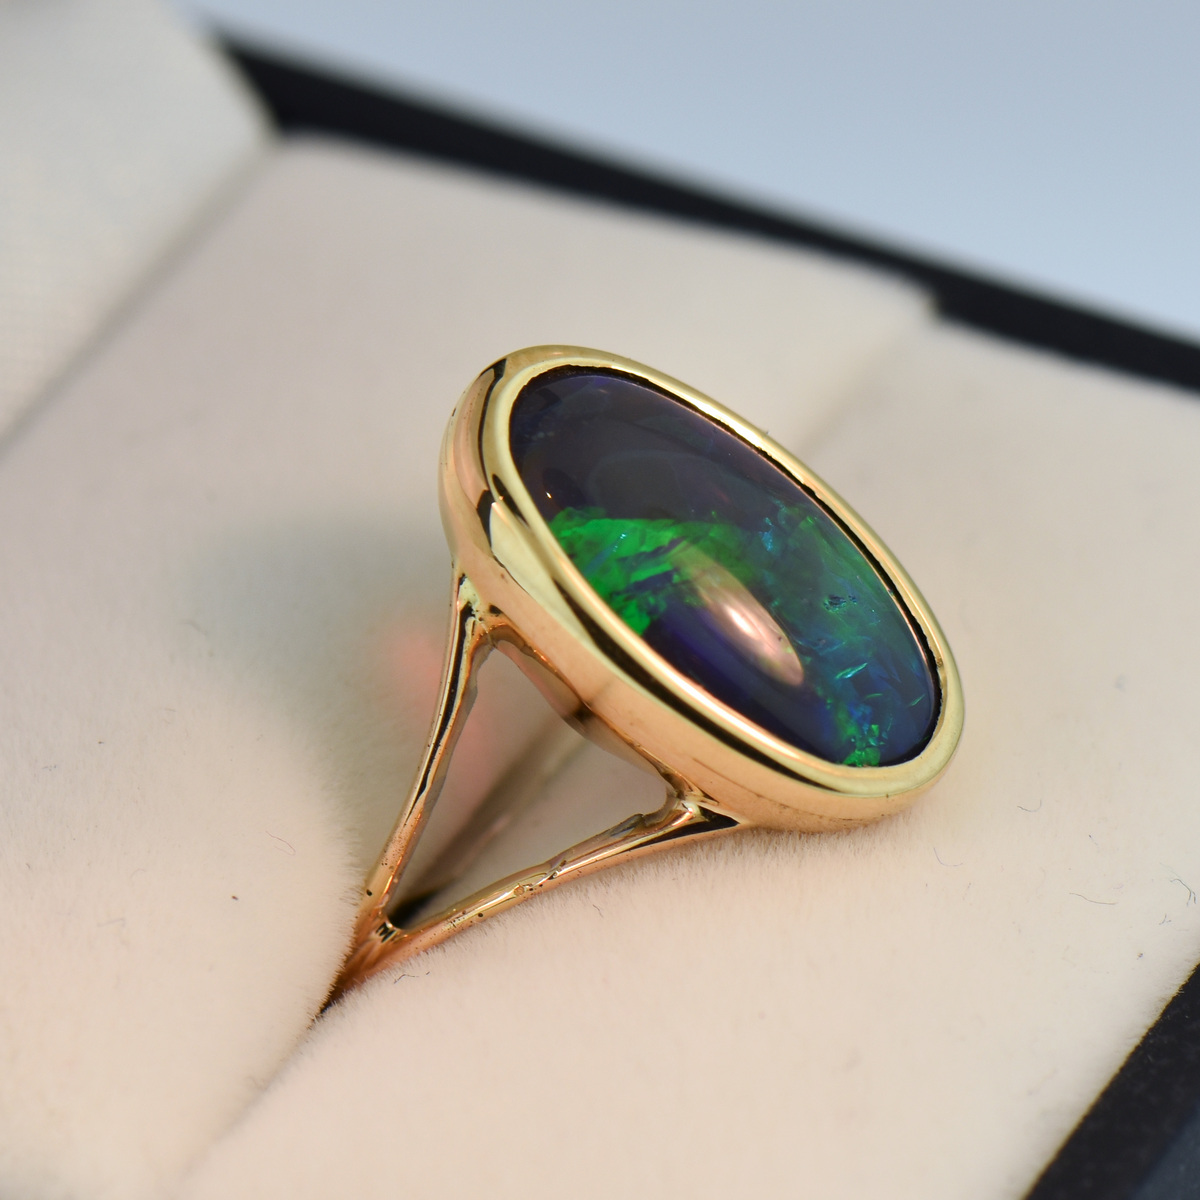 Adara' Crystal Opal Ring in Yellow Gold - Black Star Opal